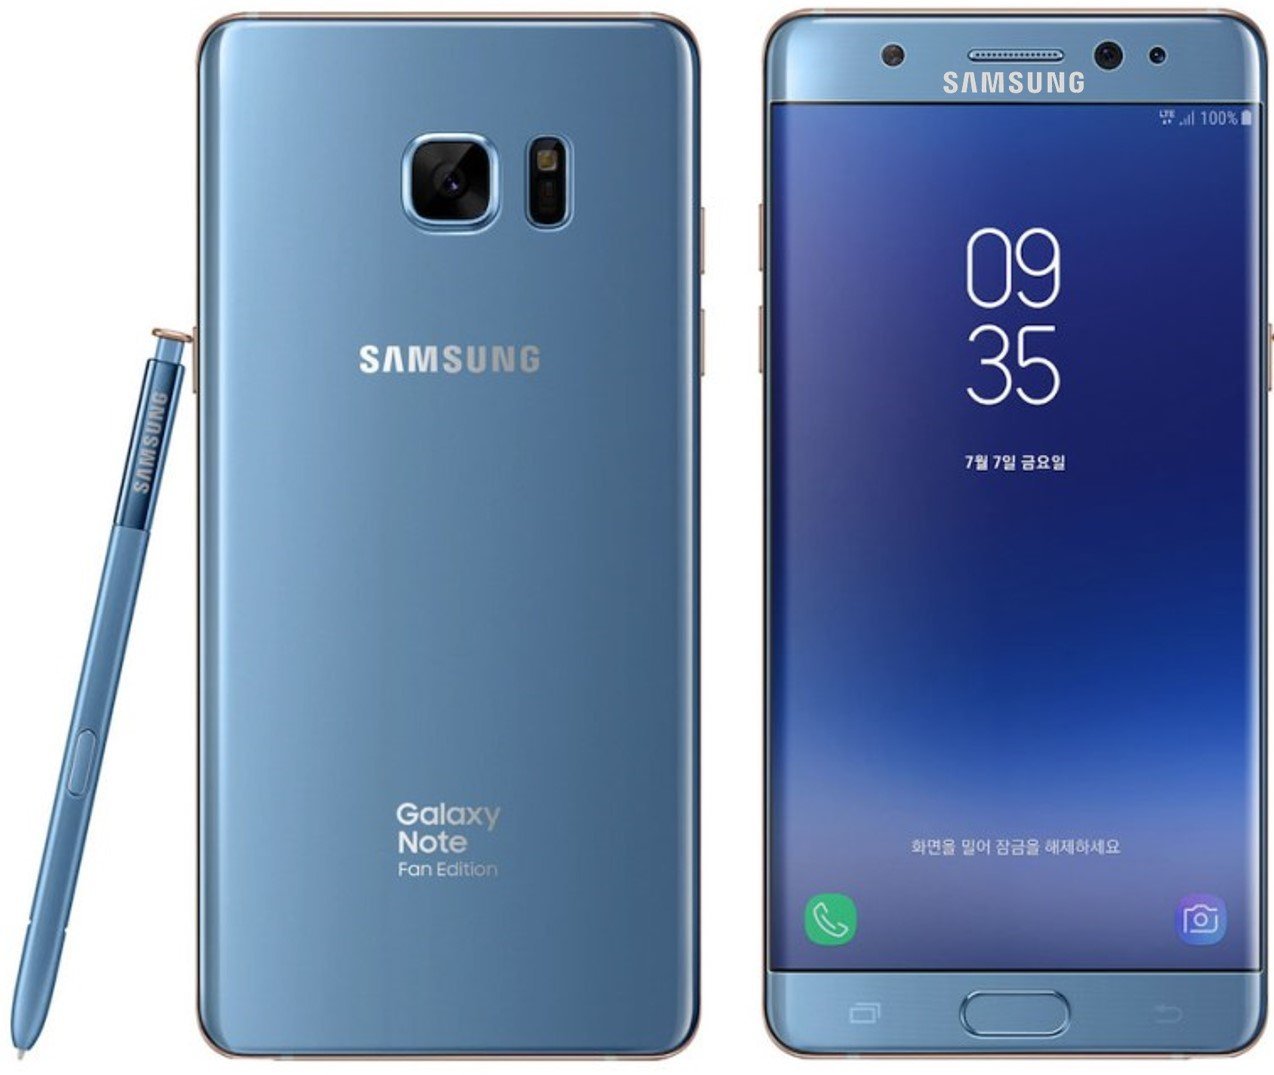 Galaxy note edition. Samsung Note 7. Samsung Note 7 Fe. Samsung Galaxy Note Fe. Galaxy Note 7 Fan Edition.